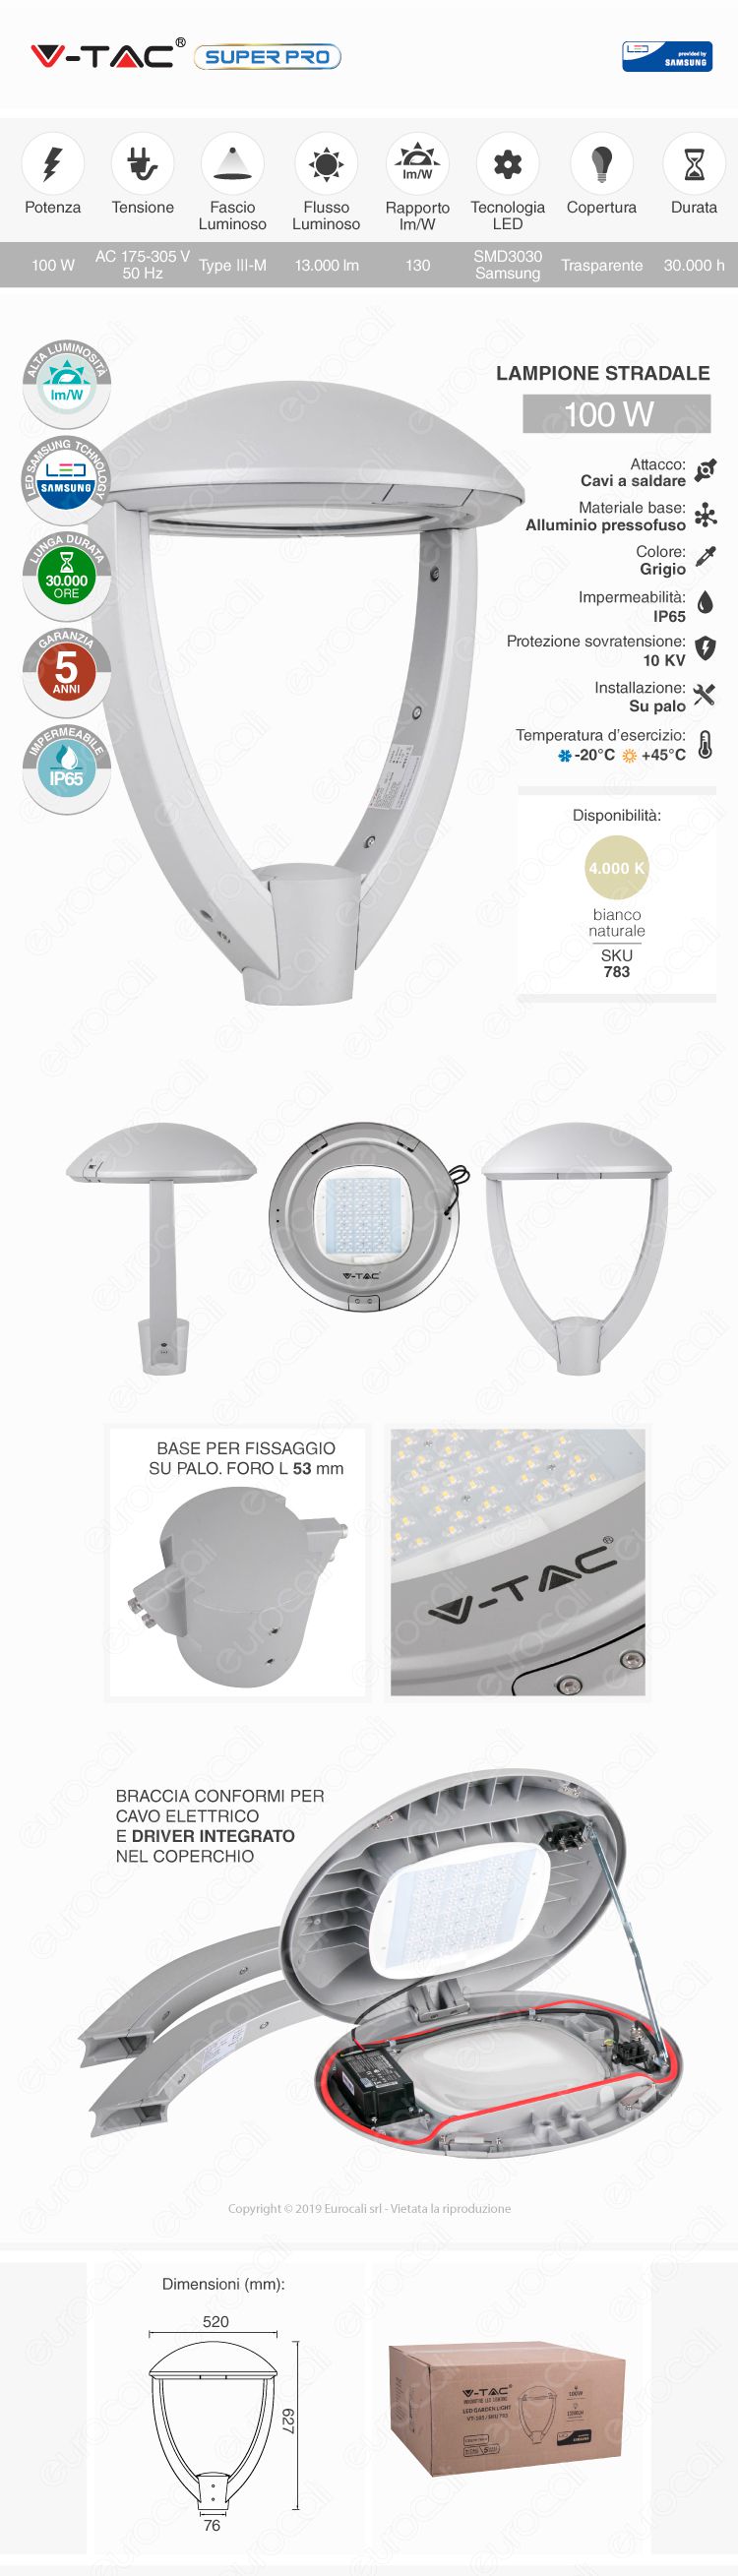 V-Tac SUPERPRO VT-105 Lampione LED da Giardino 100W Lampione SMD Chip Samsung Fascio Luminoso Type 3M - SKU 783